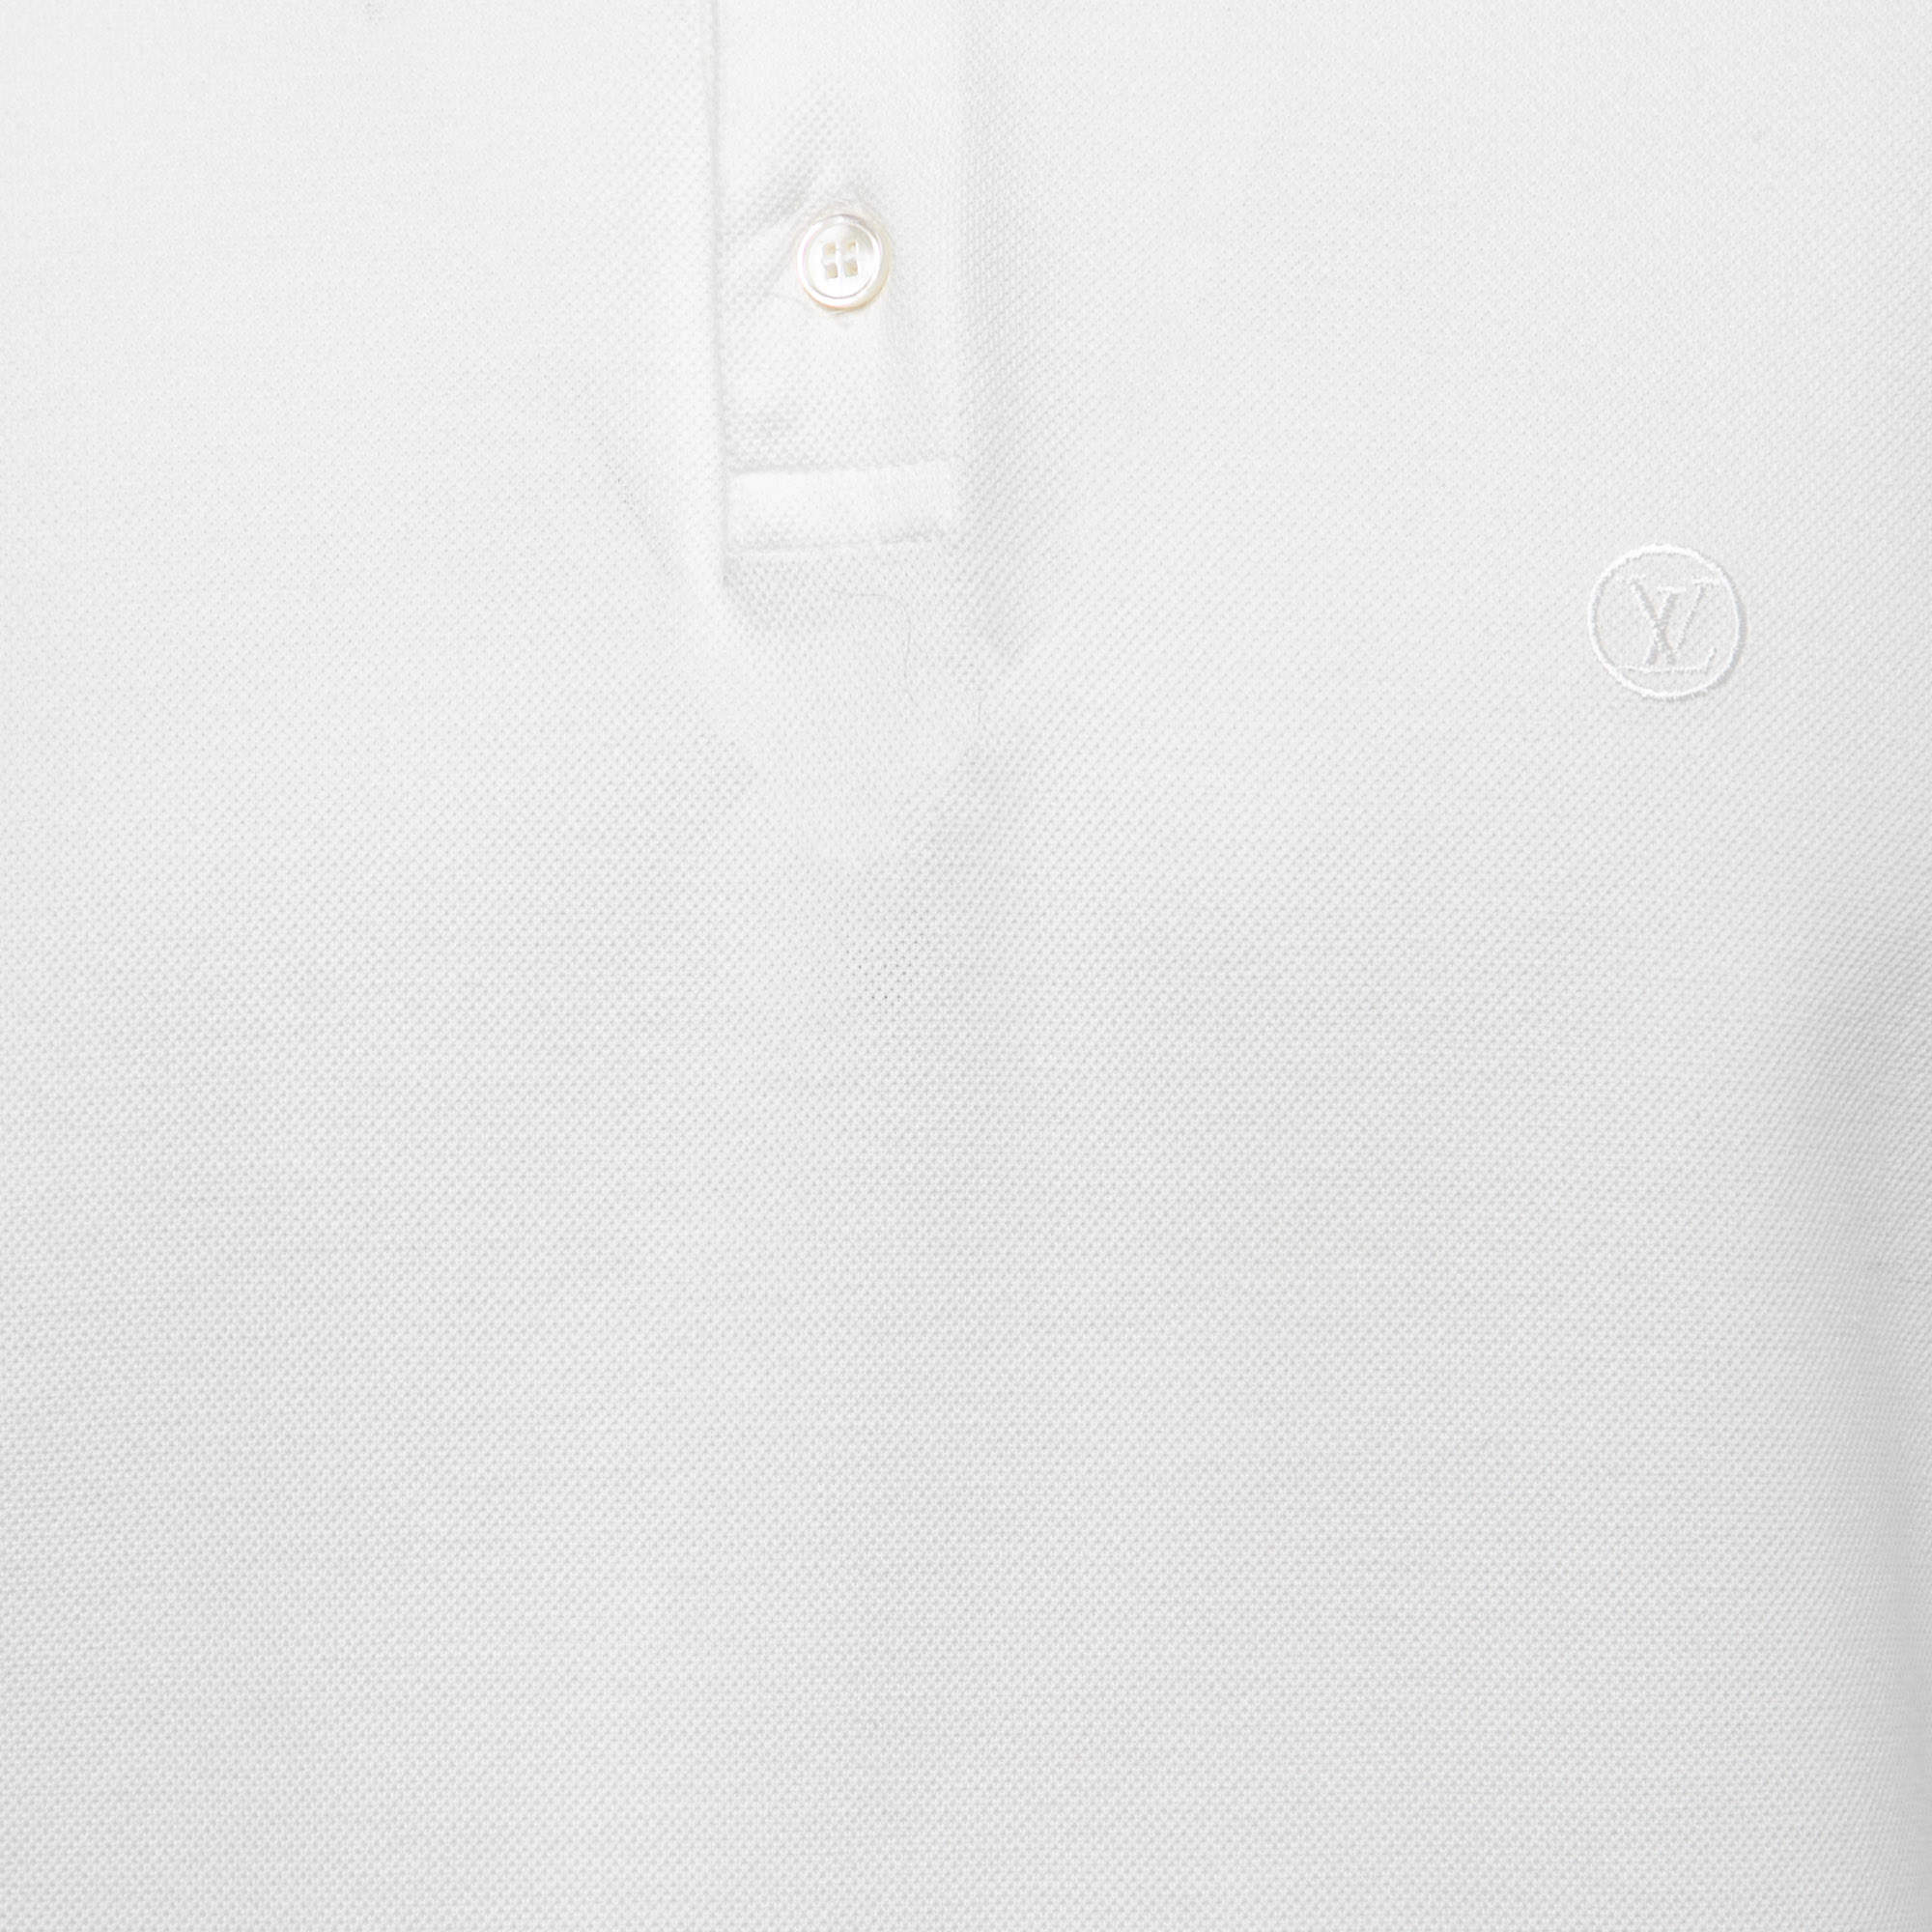 Louis Vuitton Embroidered Cotton Pique Polo Optical White. Size 5XL